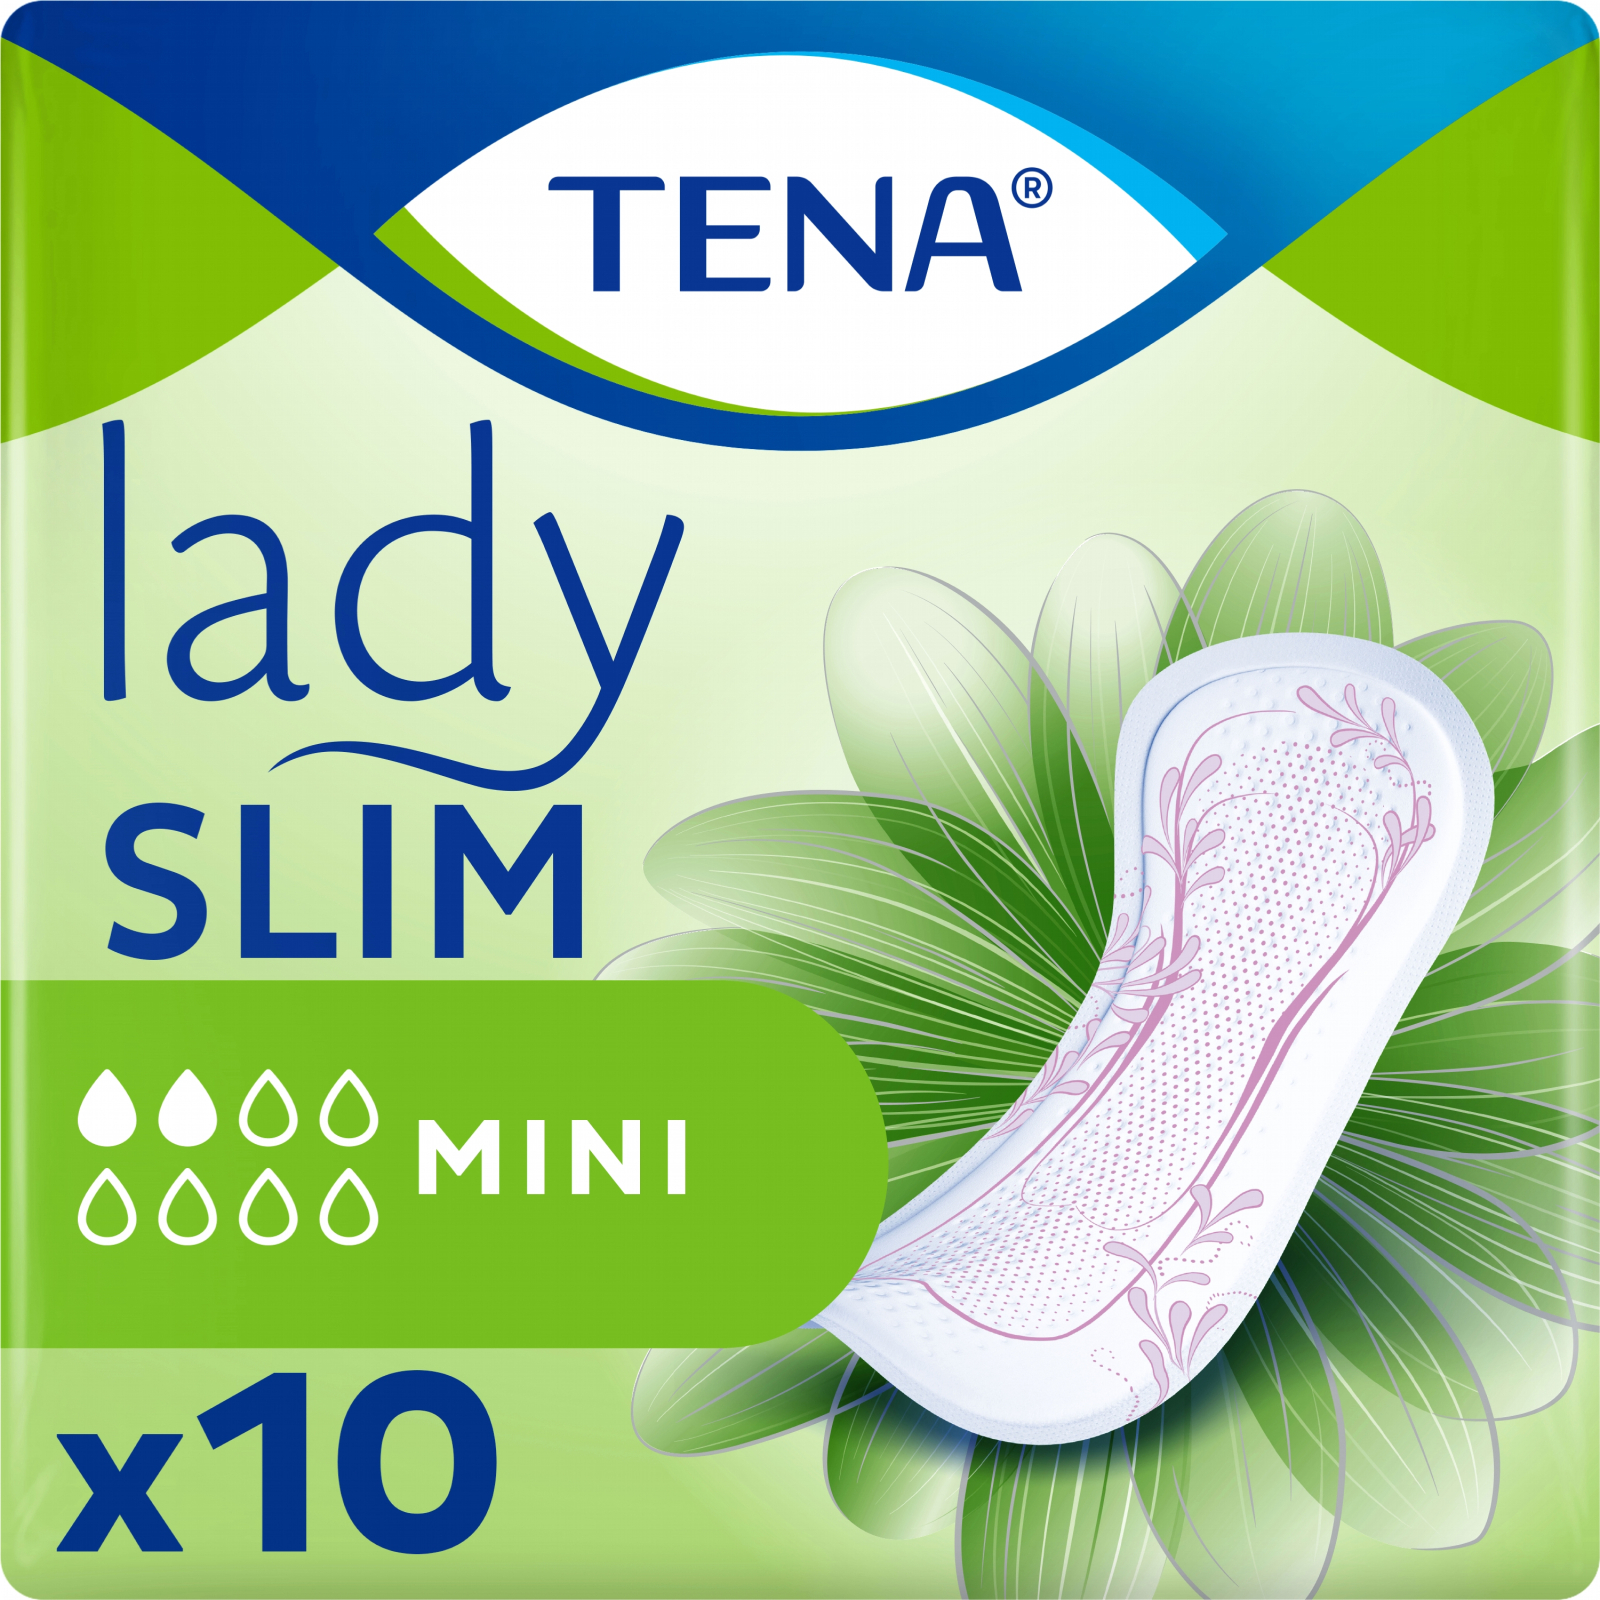 Урологические прокладки Tena Lady Slim Mini 10 шт. (7322540984705/7322540853254)